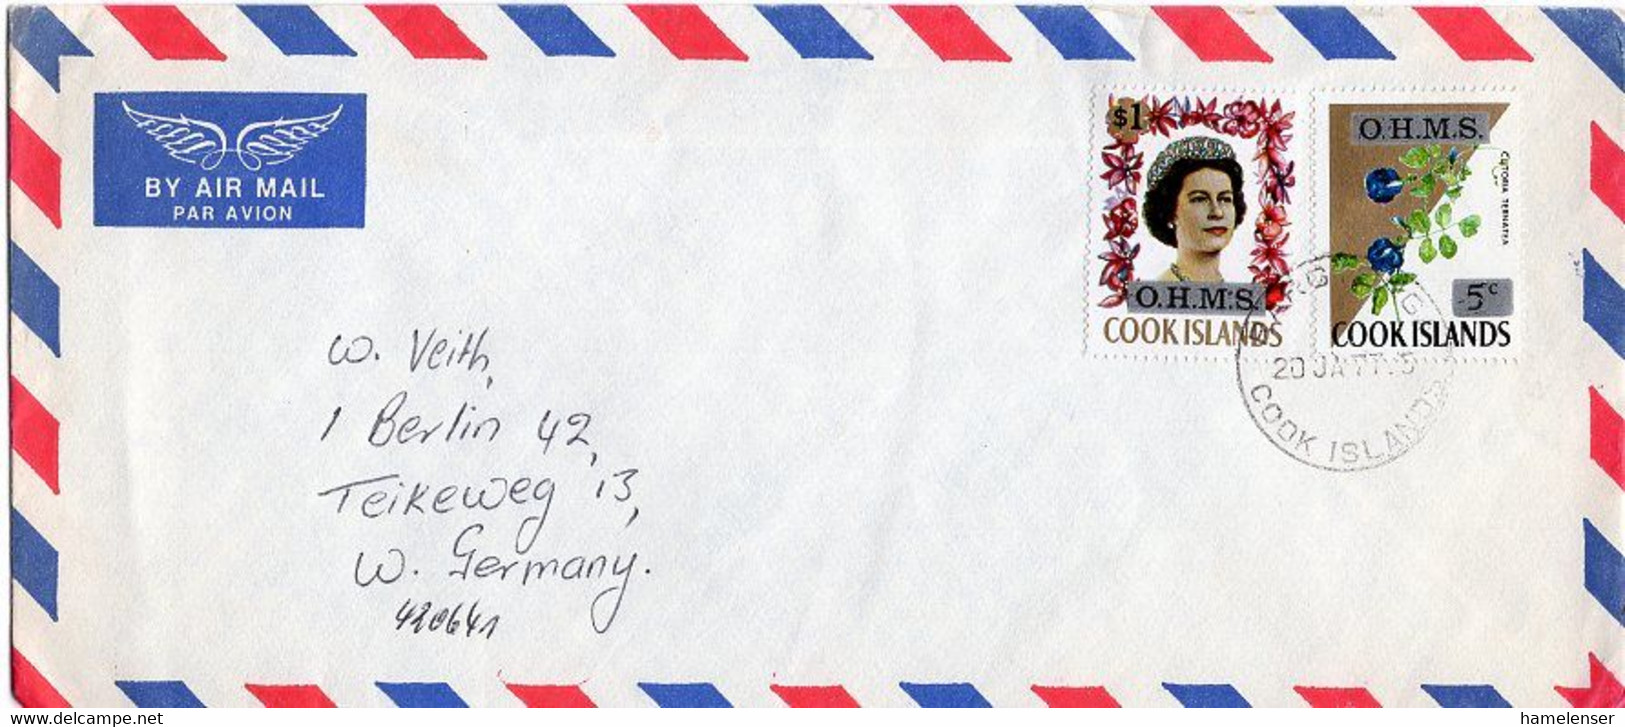 L30836 - Cook-Inseln - 1977 - $1&5c. OHMS-Aufdruck MiF A. LpBf. RAROTONGA -> Westdeutschland - Cook